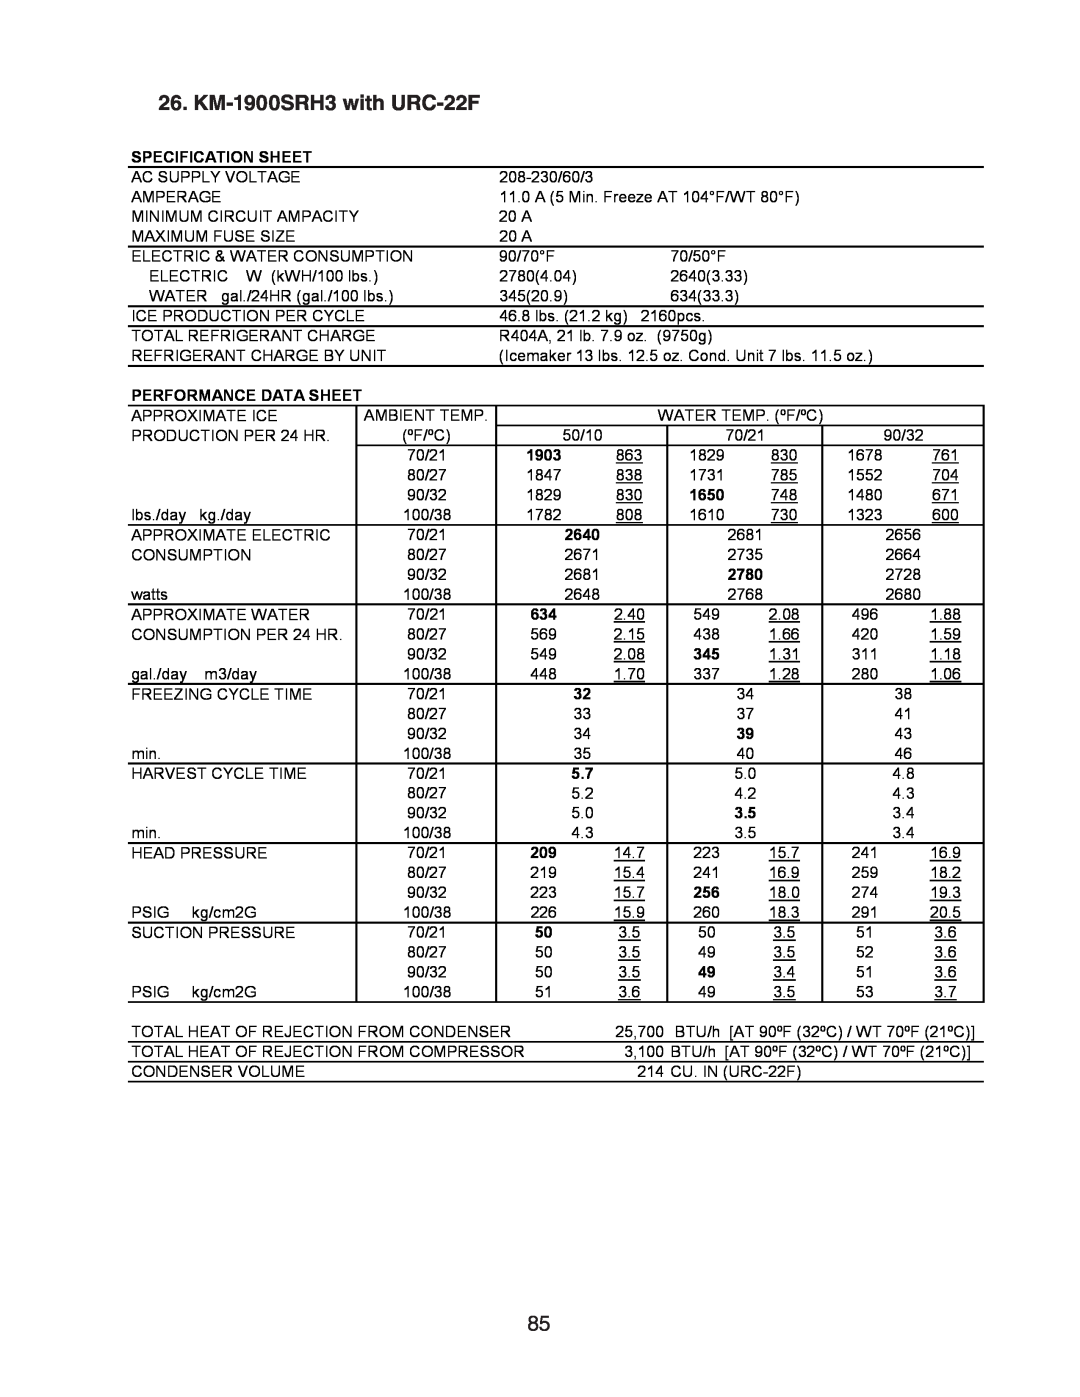 Hoshizaki KM-1301SAH/3, SRH/3 KM-2100SWH3, SWH/3 KM-1900SRH3 with URC-22F, Specification Sheet, Performance Data Sheet 